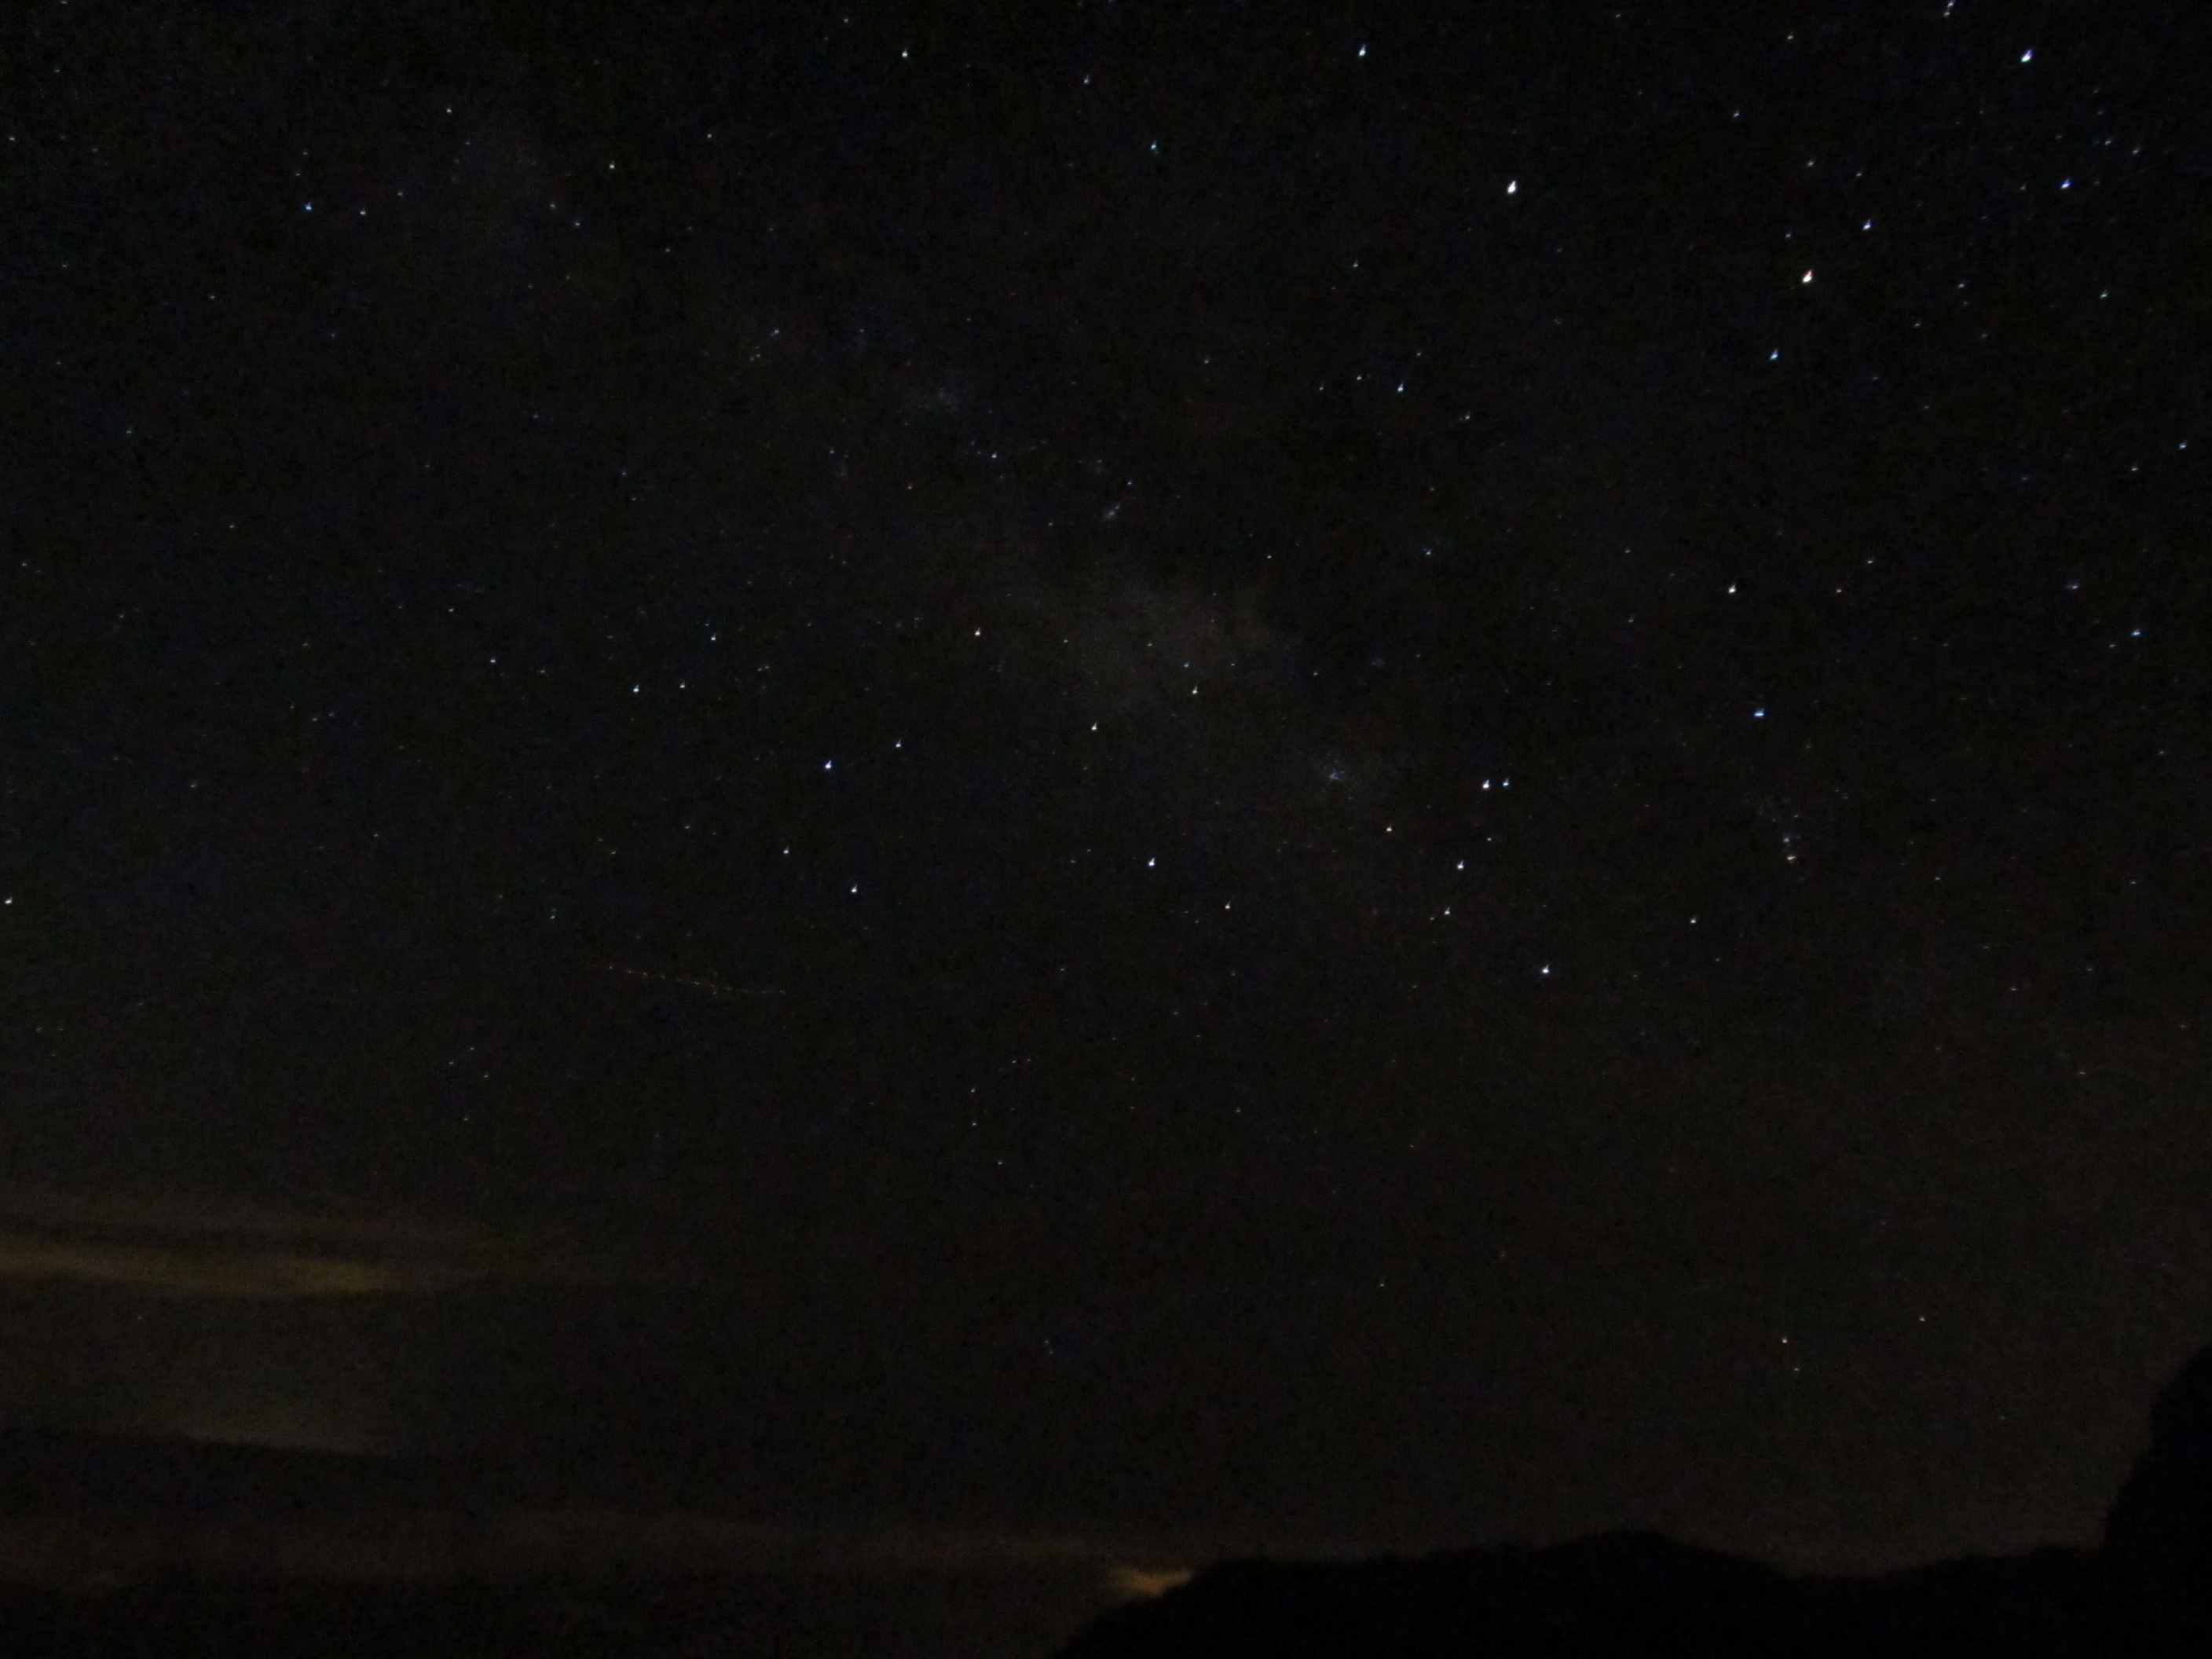 Scorpius, Saggitarius and Milky Way seen from the Tenerife Canon Powershoot SX 130 IS